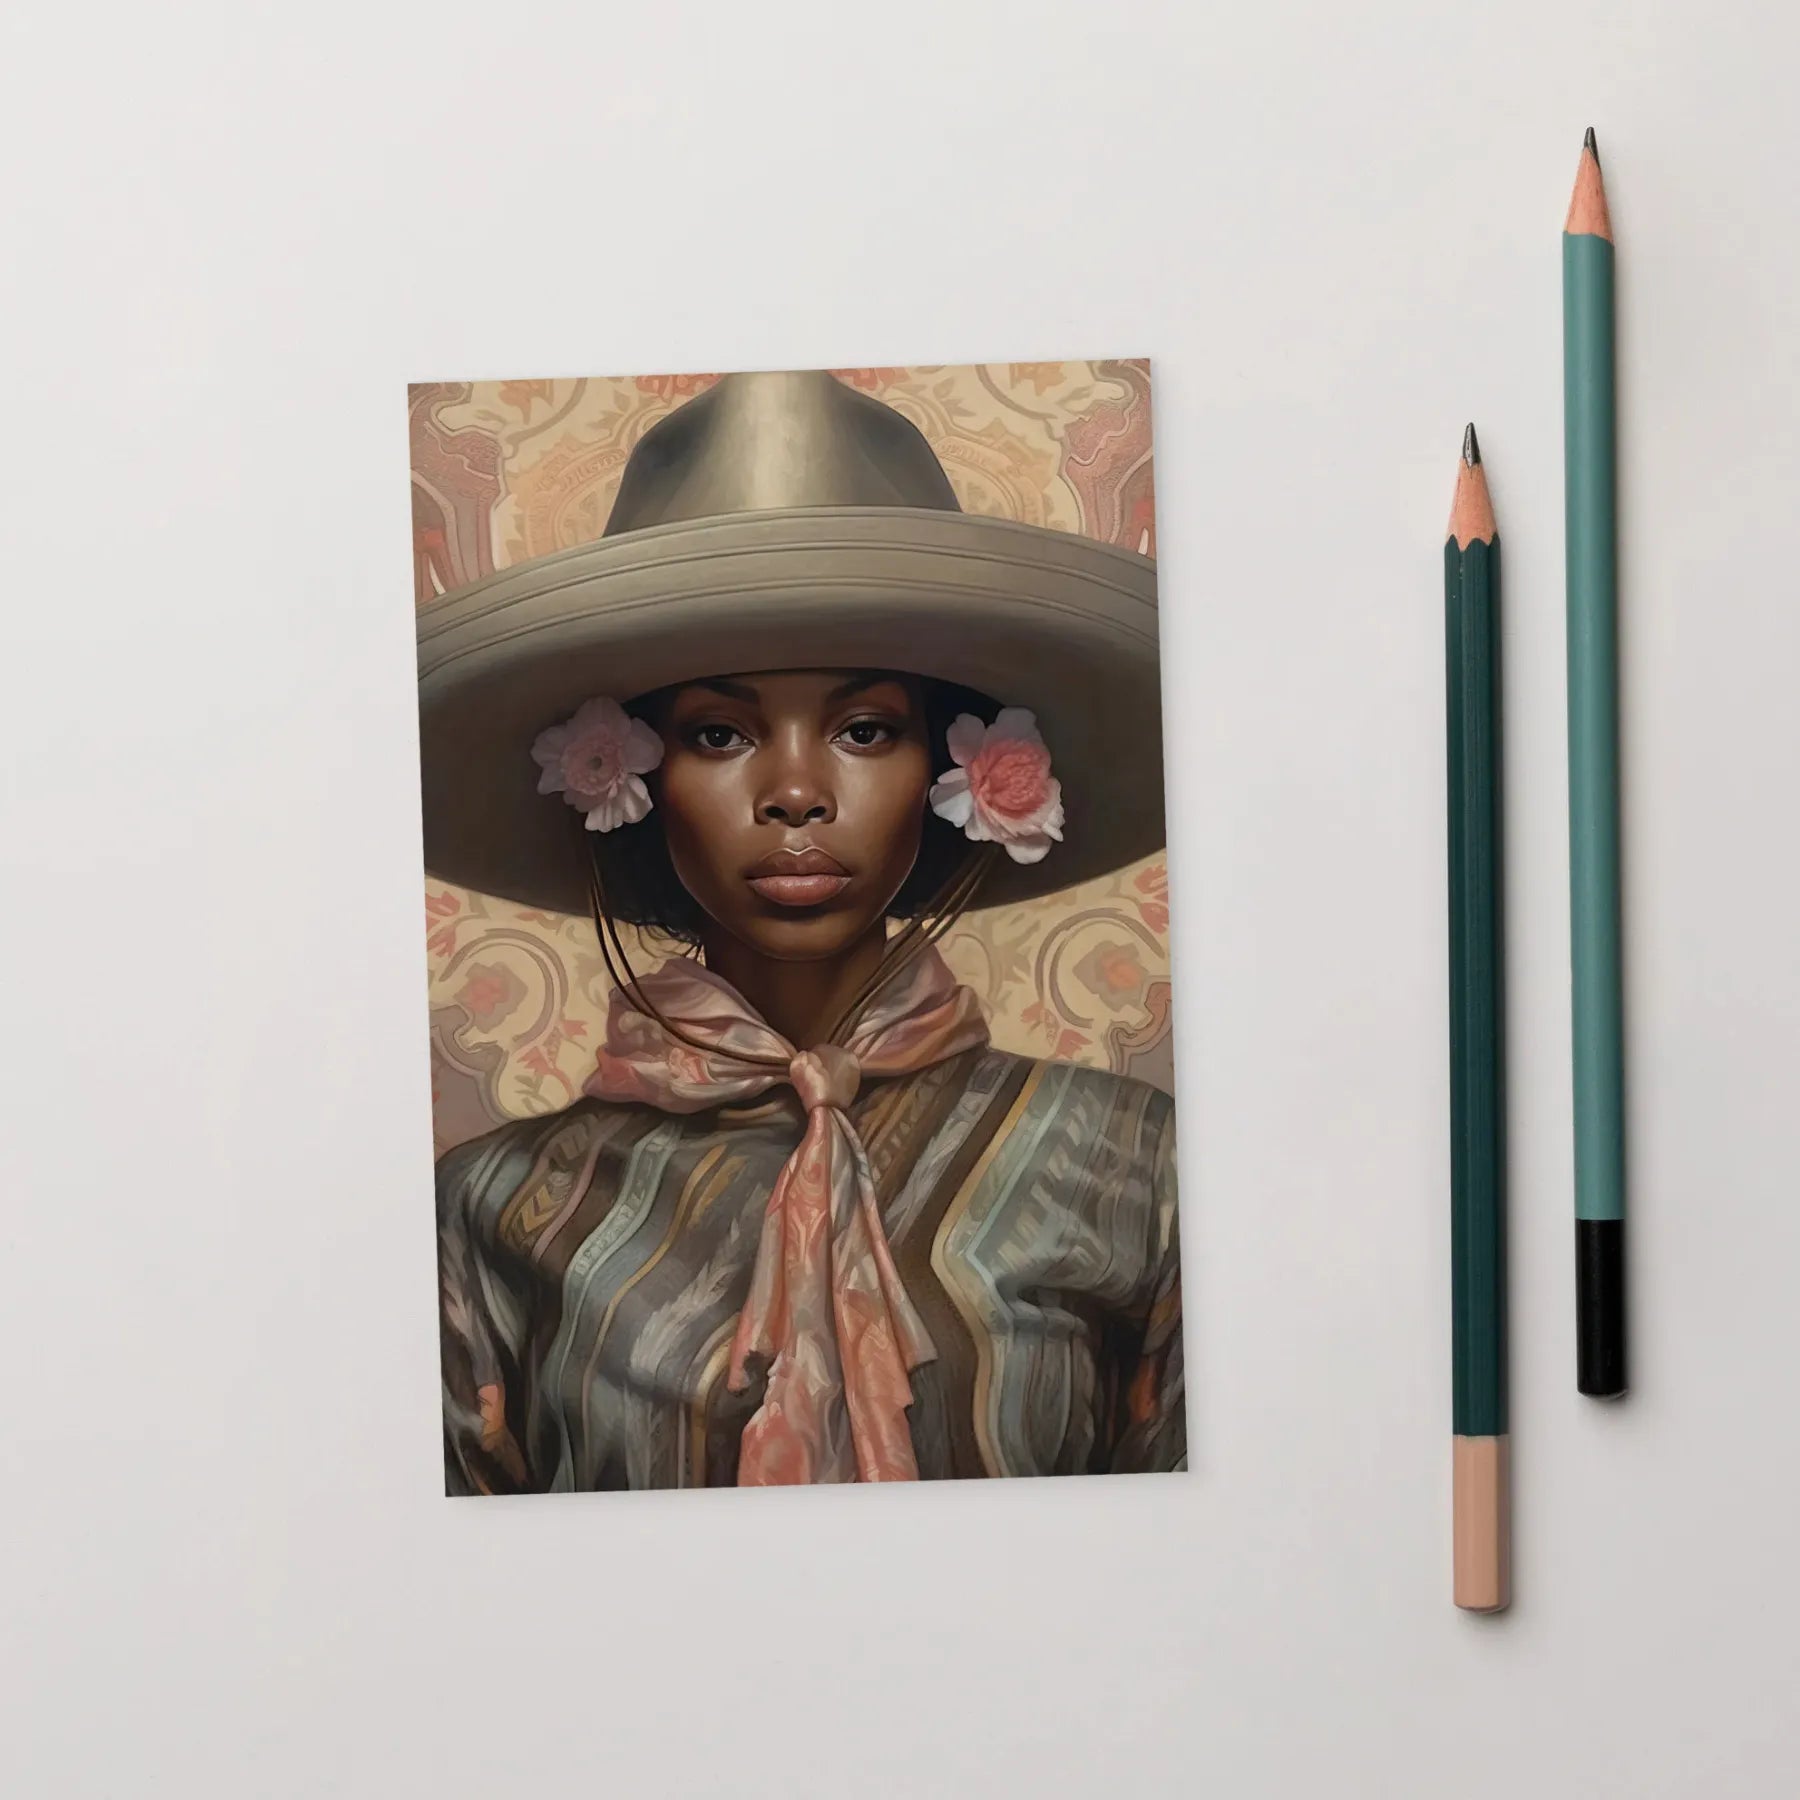 Sadie - Lesbian Black Cowgirl Art Print - Wlw Sapphic Femme - 4’x6’ - Posters Prints & Visual Artwork - Aesthetic Art